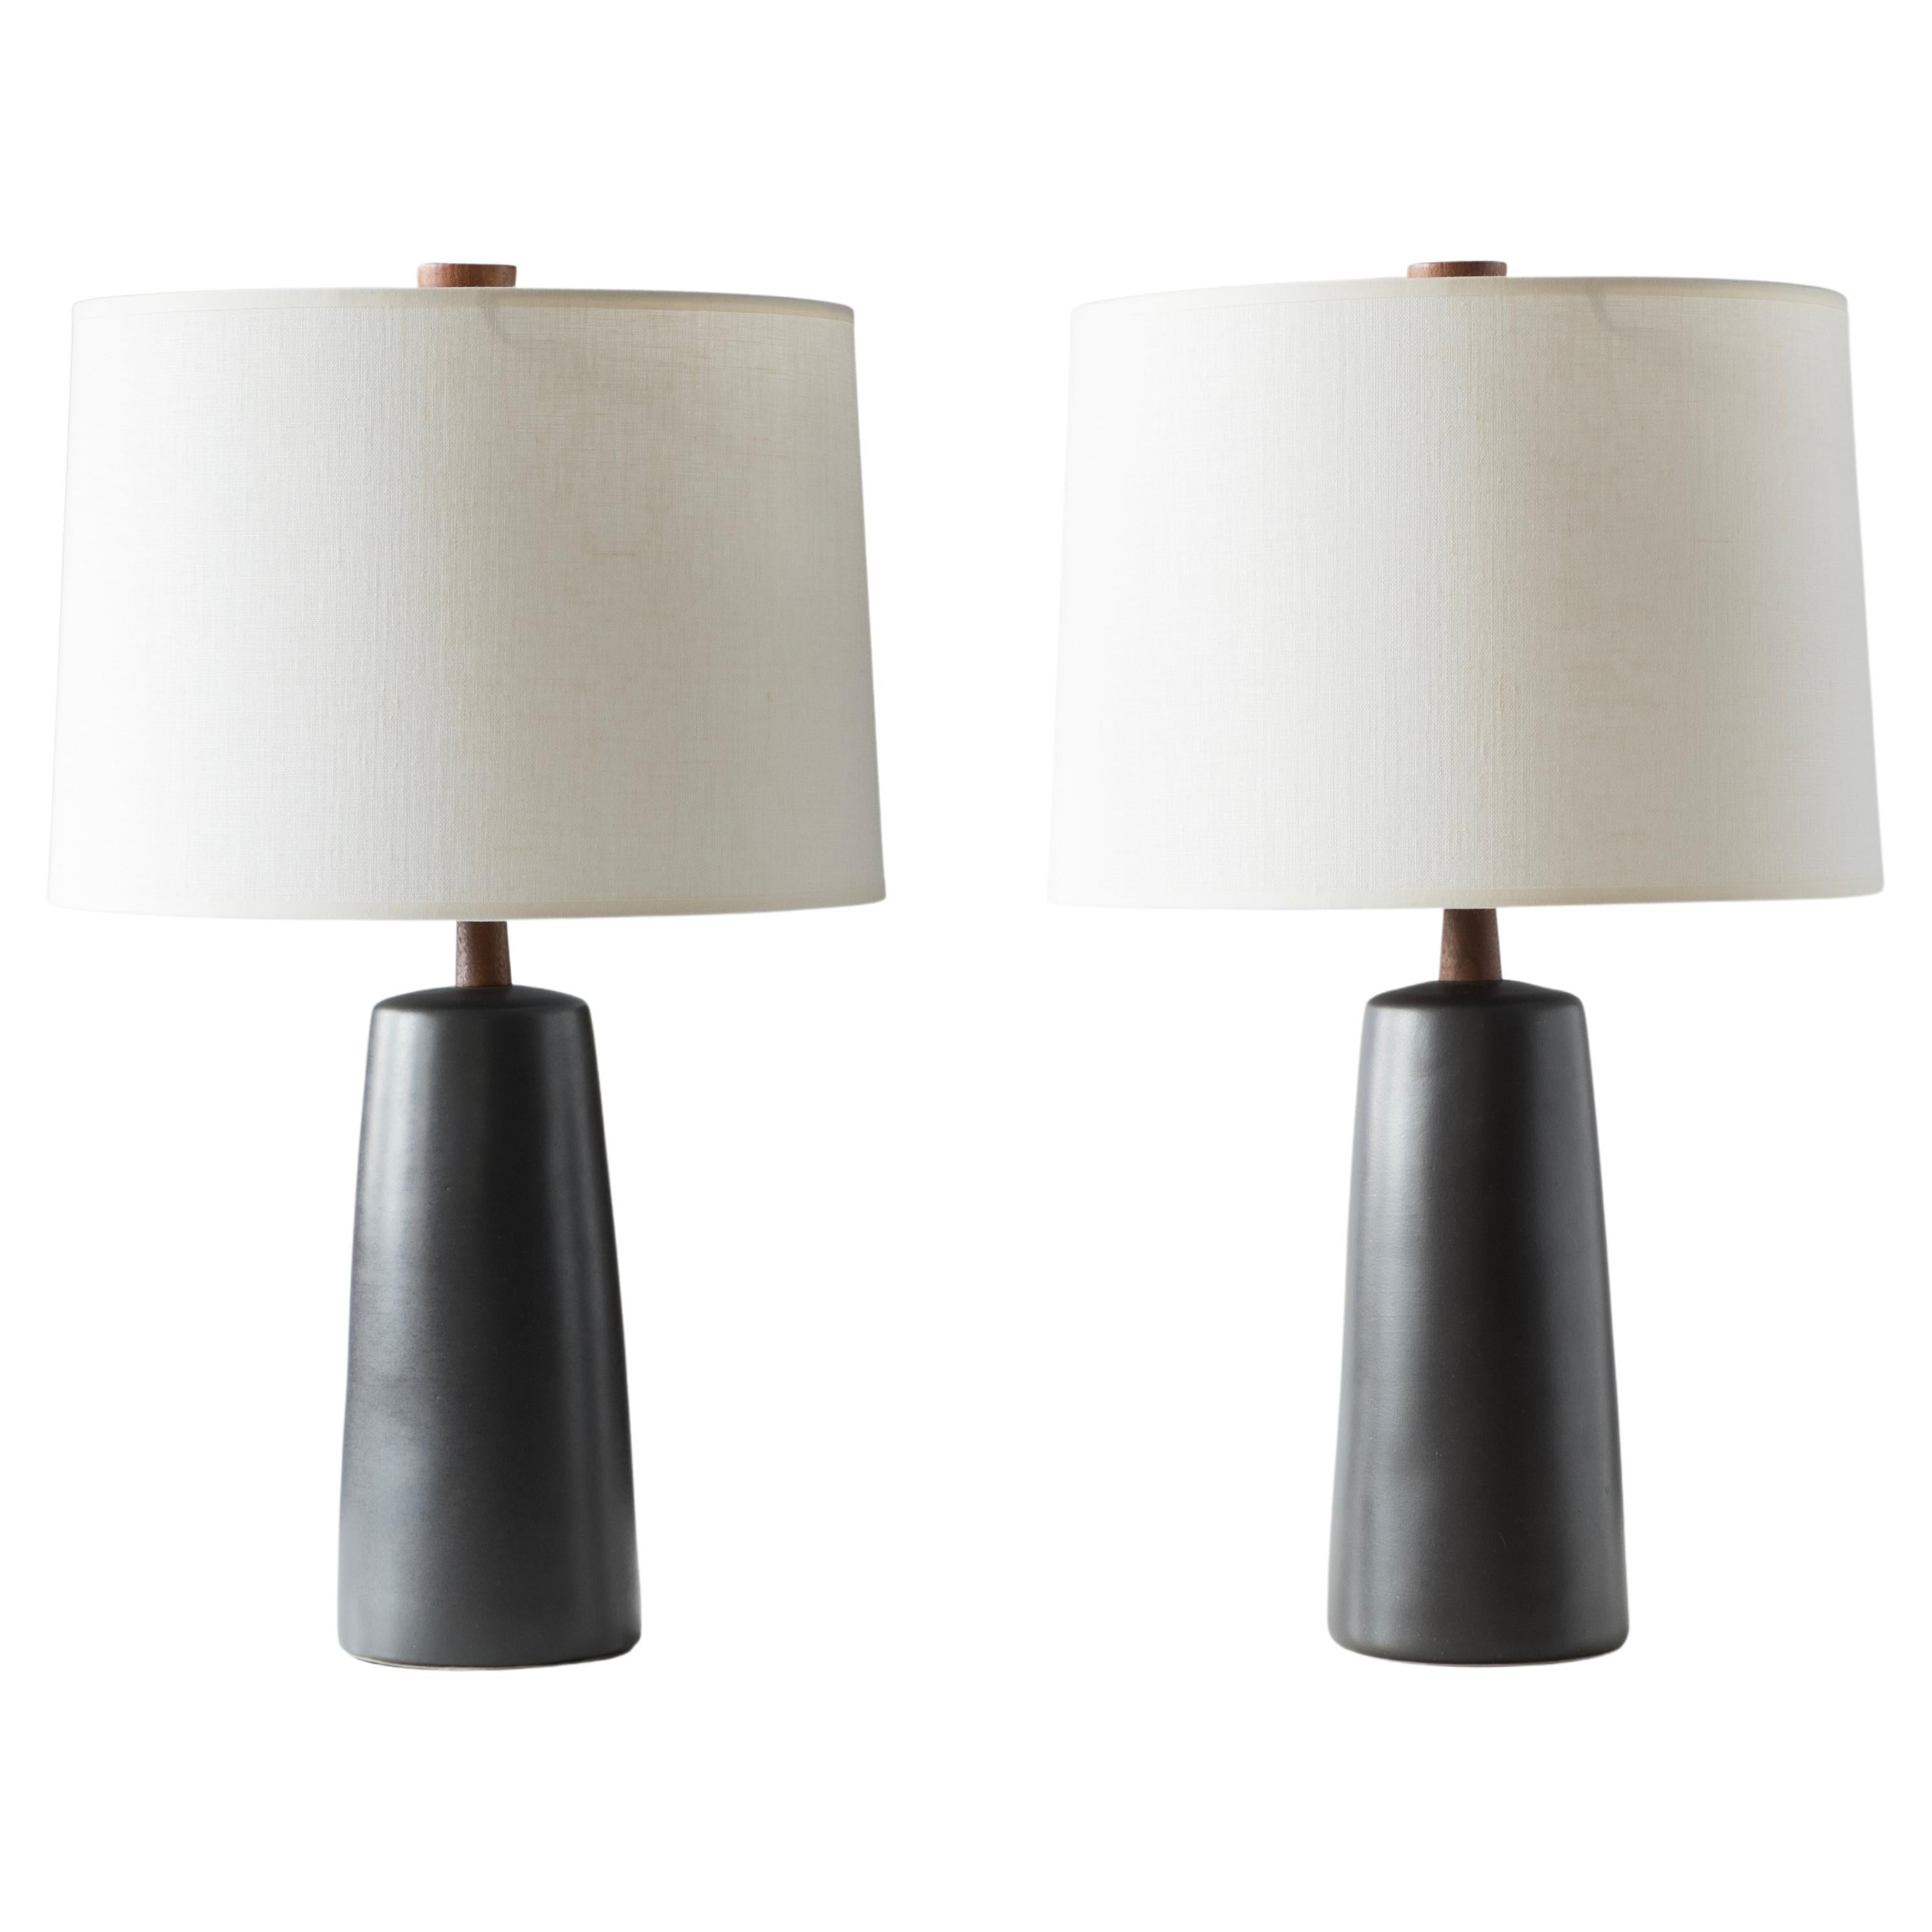 Gordon & Jane Martz / Marshall Studios Ceramic Table Lamps, Matte Black Glaze